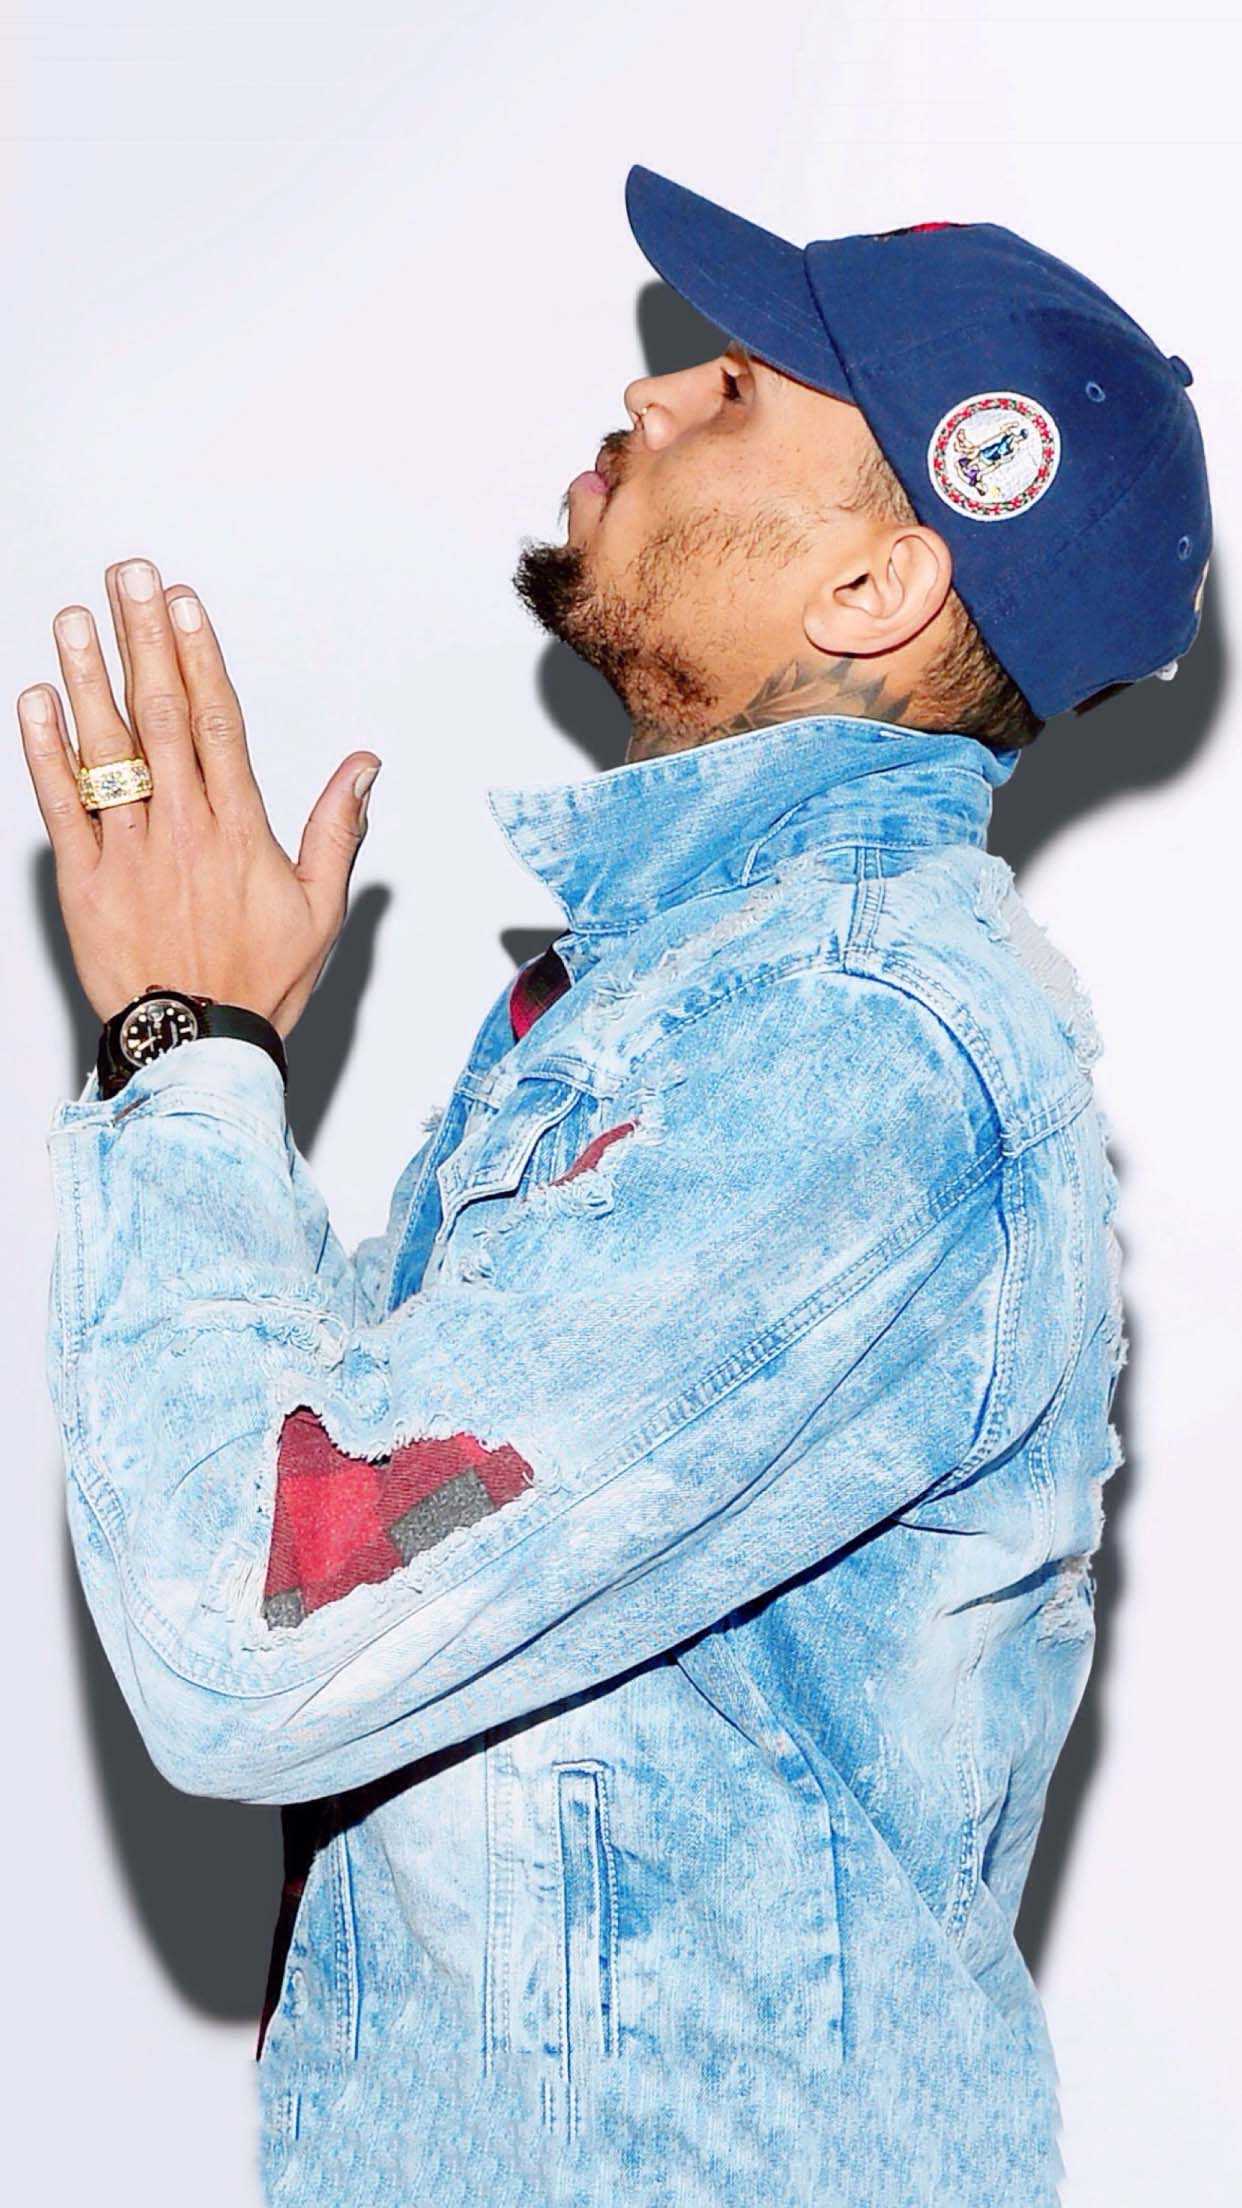 Chris Brown Iphone Wallpapers